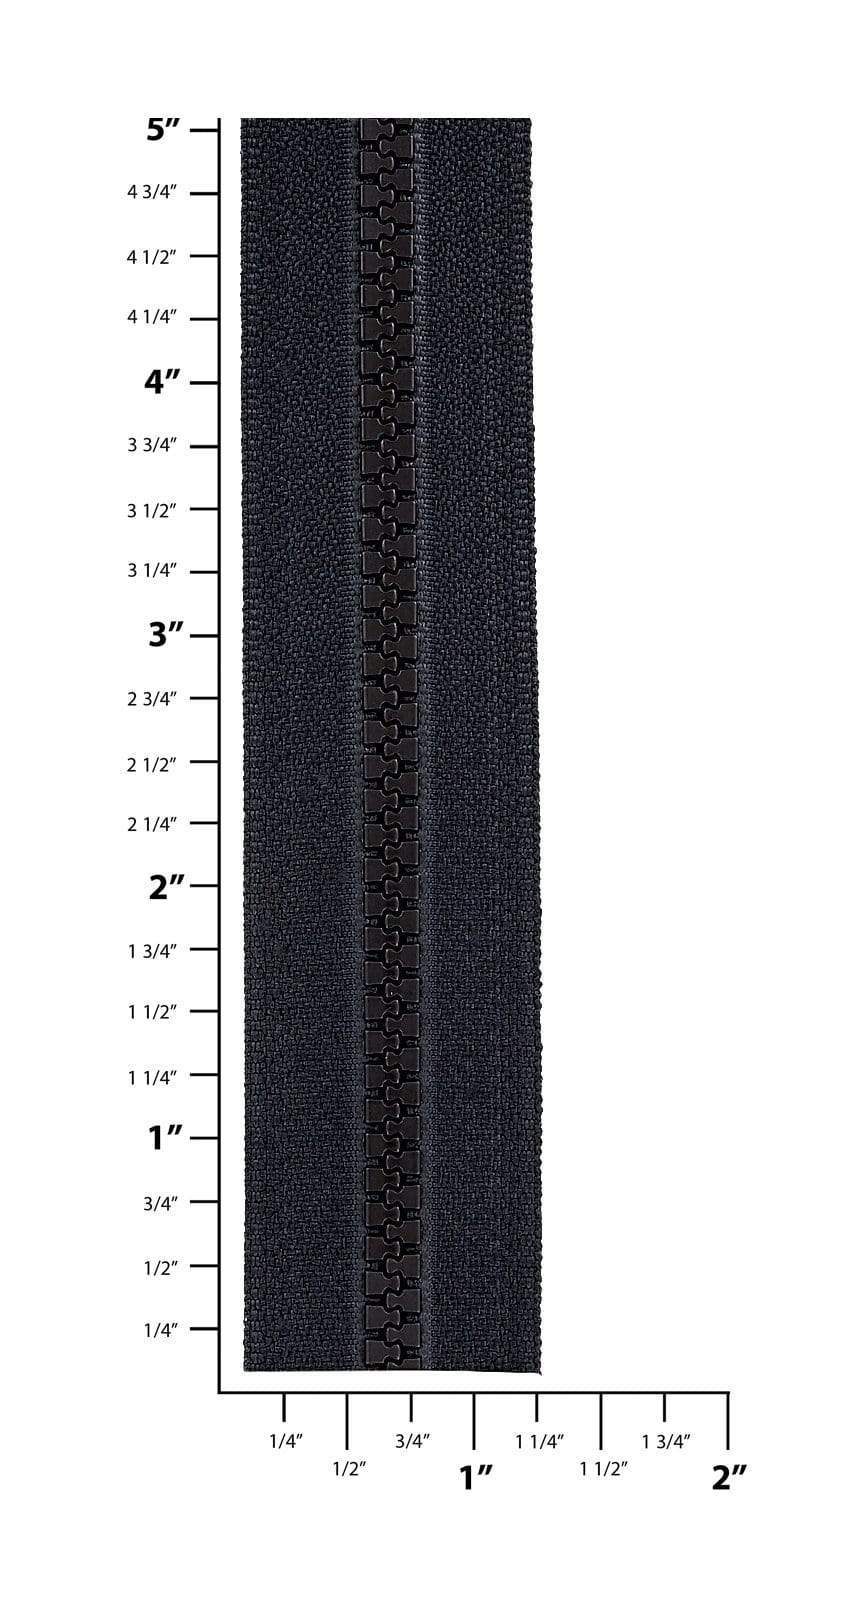 Ohio Travel Bag-Zippers-#10 Vislon, Black, 30 YKK Separating Two-Way  Jacket Zipper, Plastic, #10VTW-30-BLK-$8.10